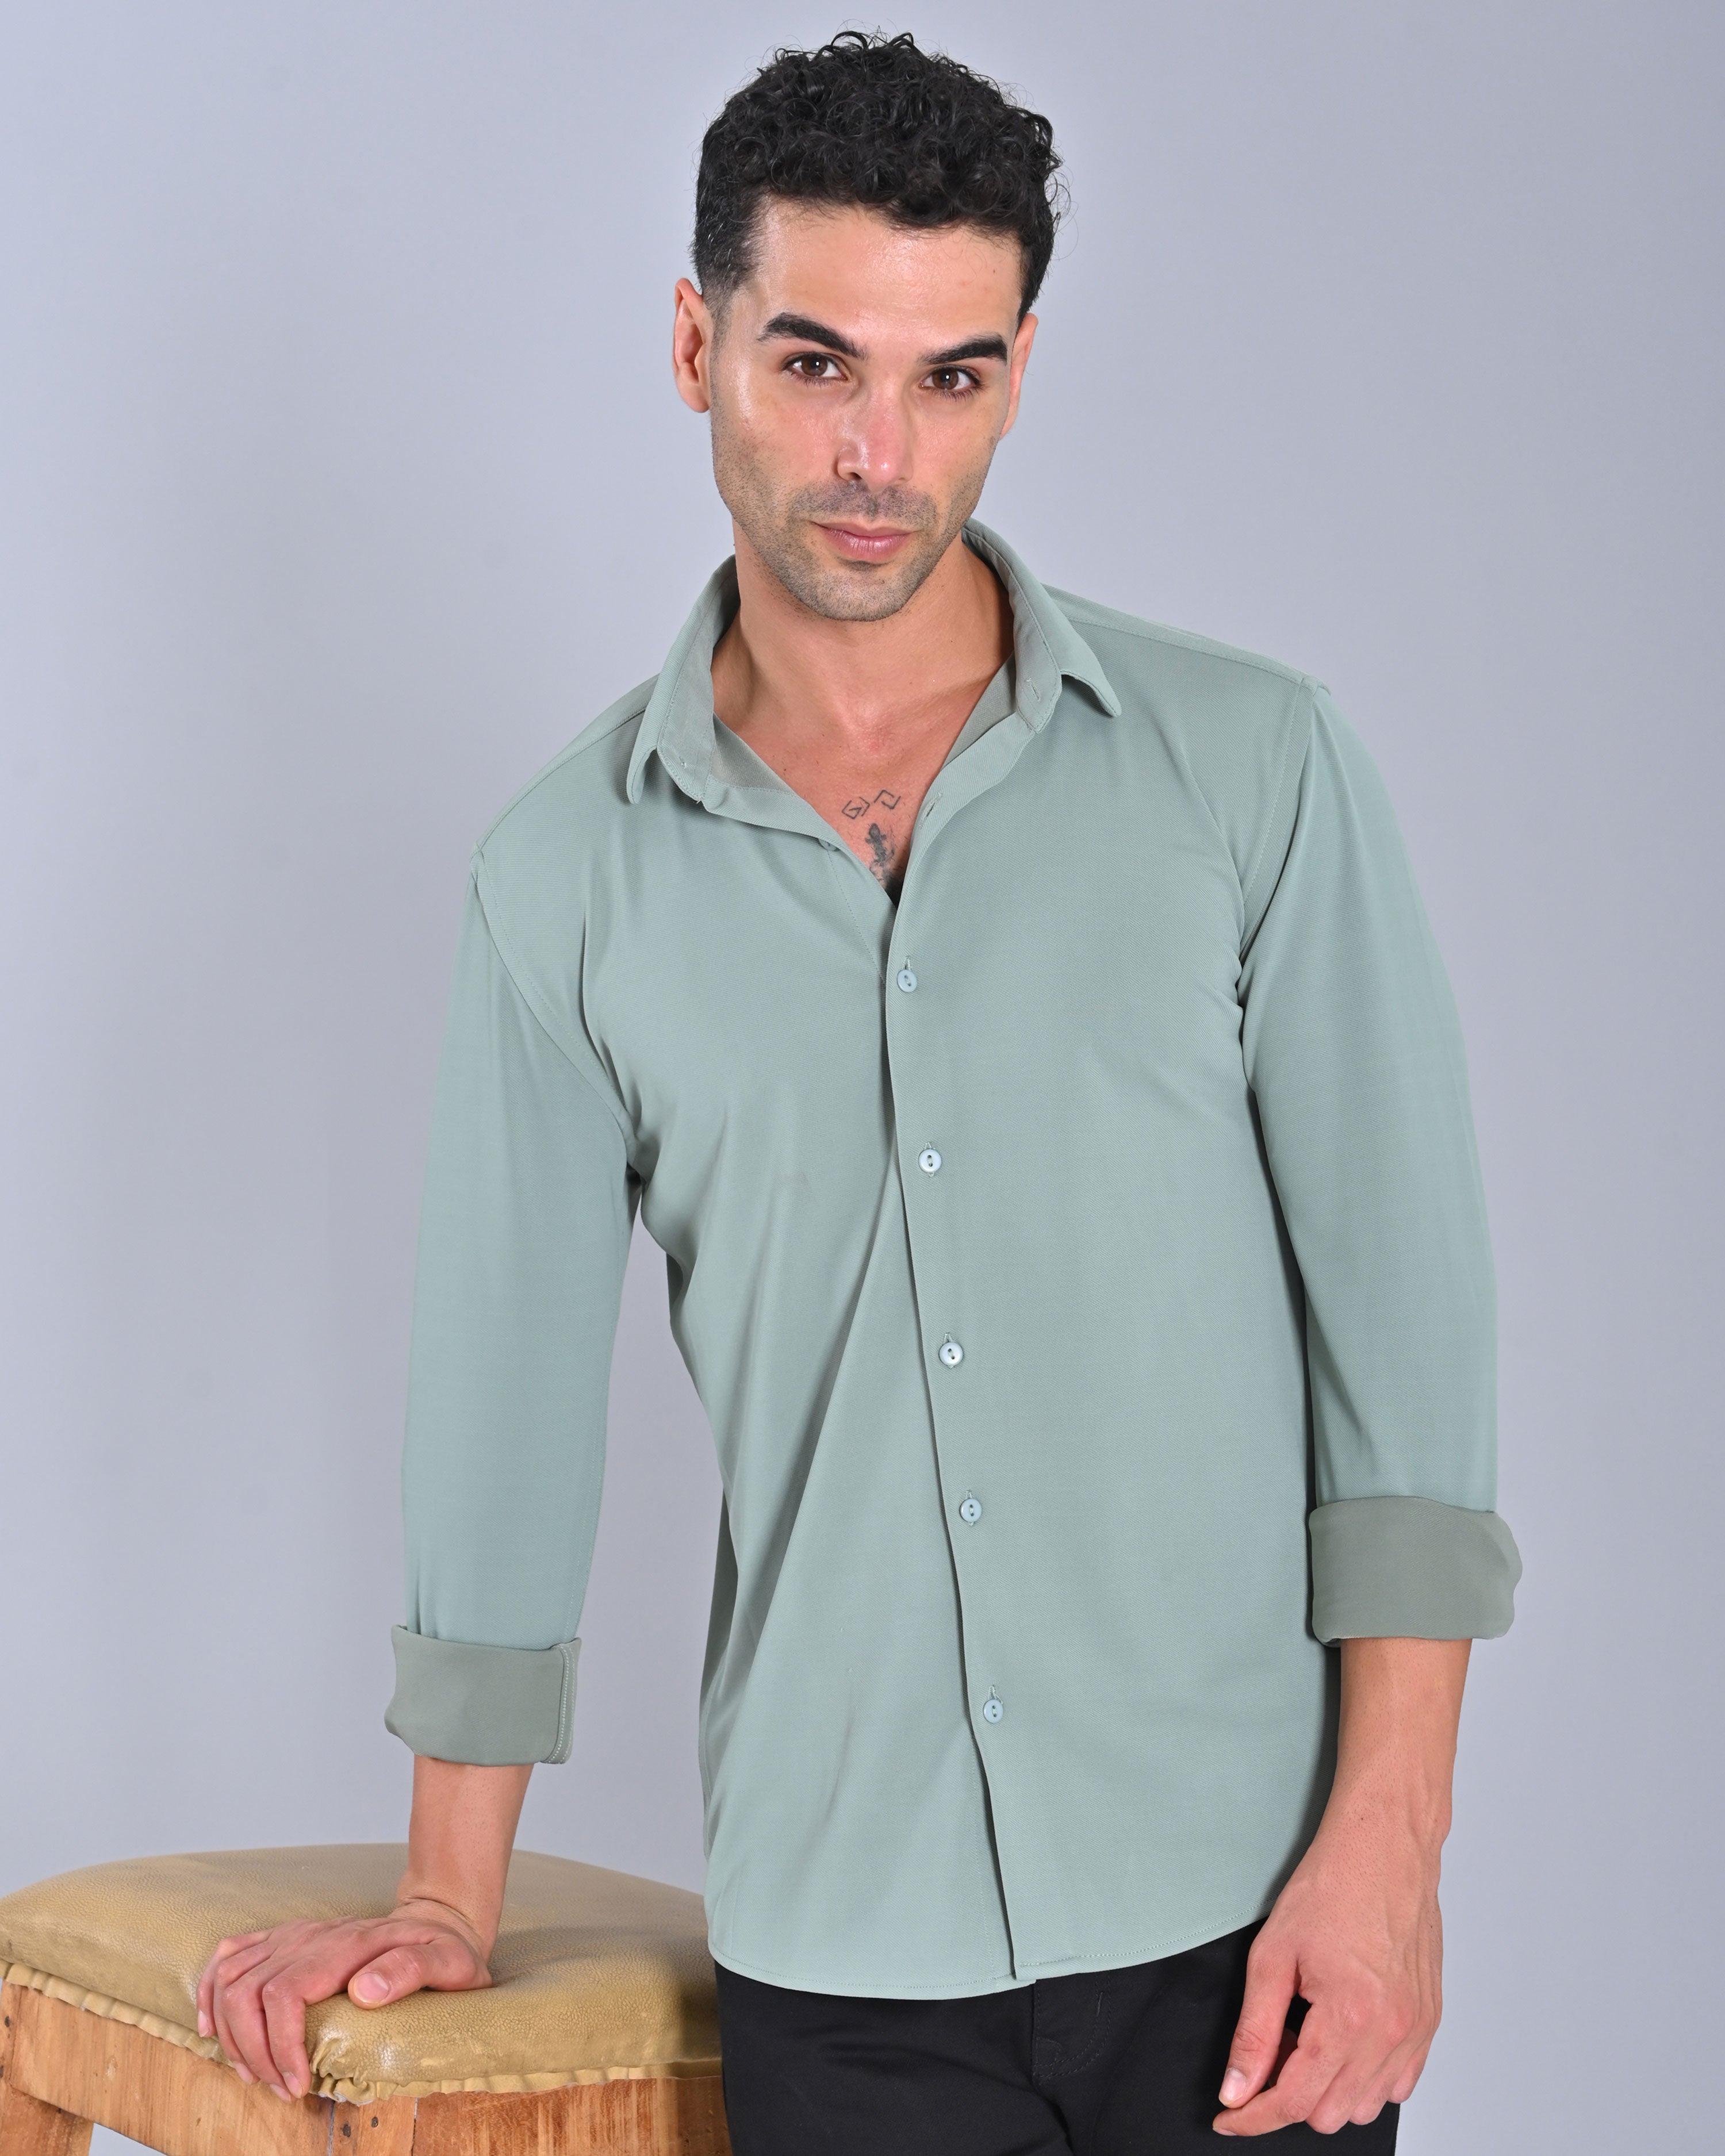 Men's Solid Light Blue Full Sleeve Cross Knit Shirt